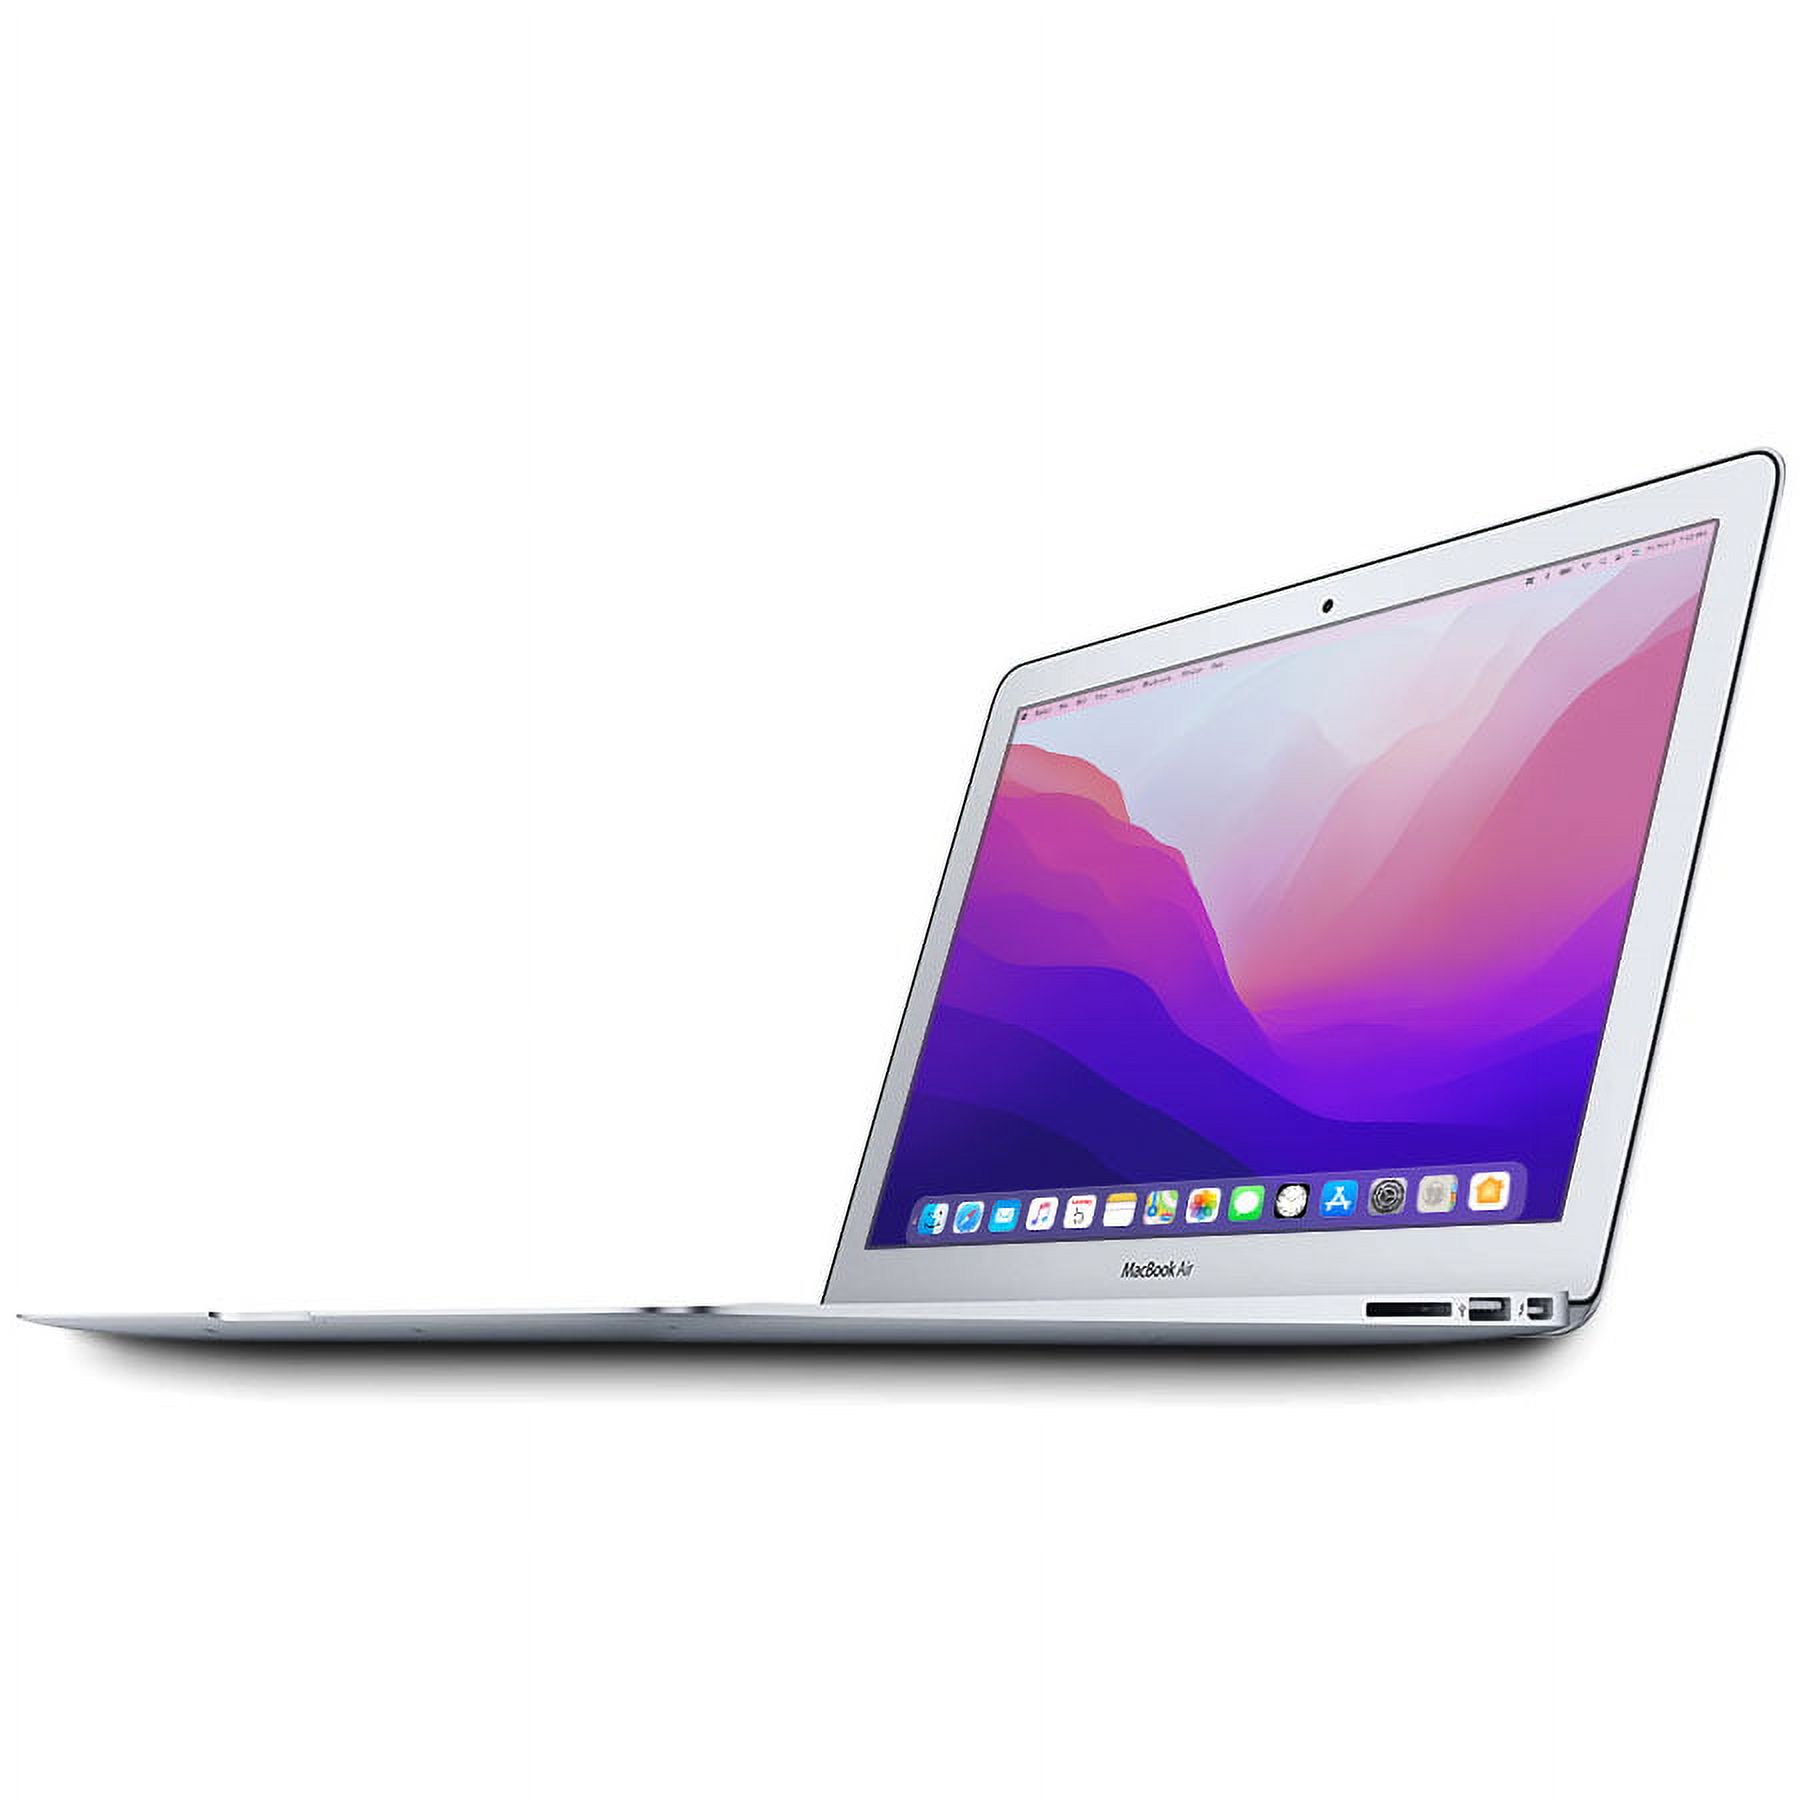 Restored Apple MacBook Air, 13.3" Laptop, Intel Core i5, 8GB RAM, 256GB SSD, None, Mac OS X 10.10, Silver, MMGG2LL/A (Refurbished) - image 3 of 4